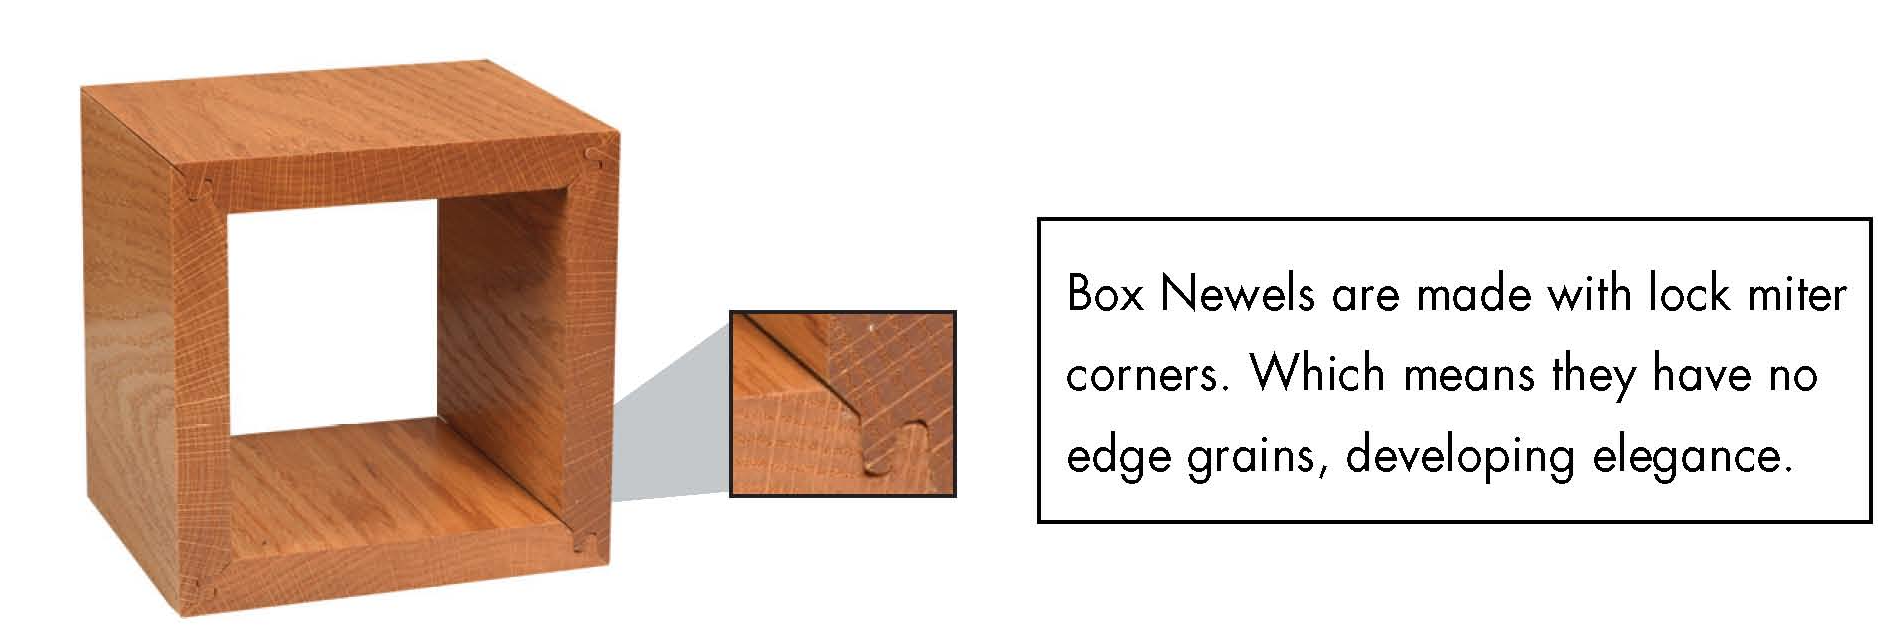 Box Newel with Lock Mitered Corners